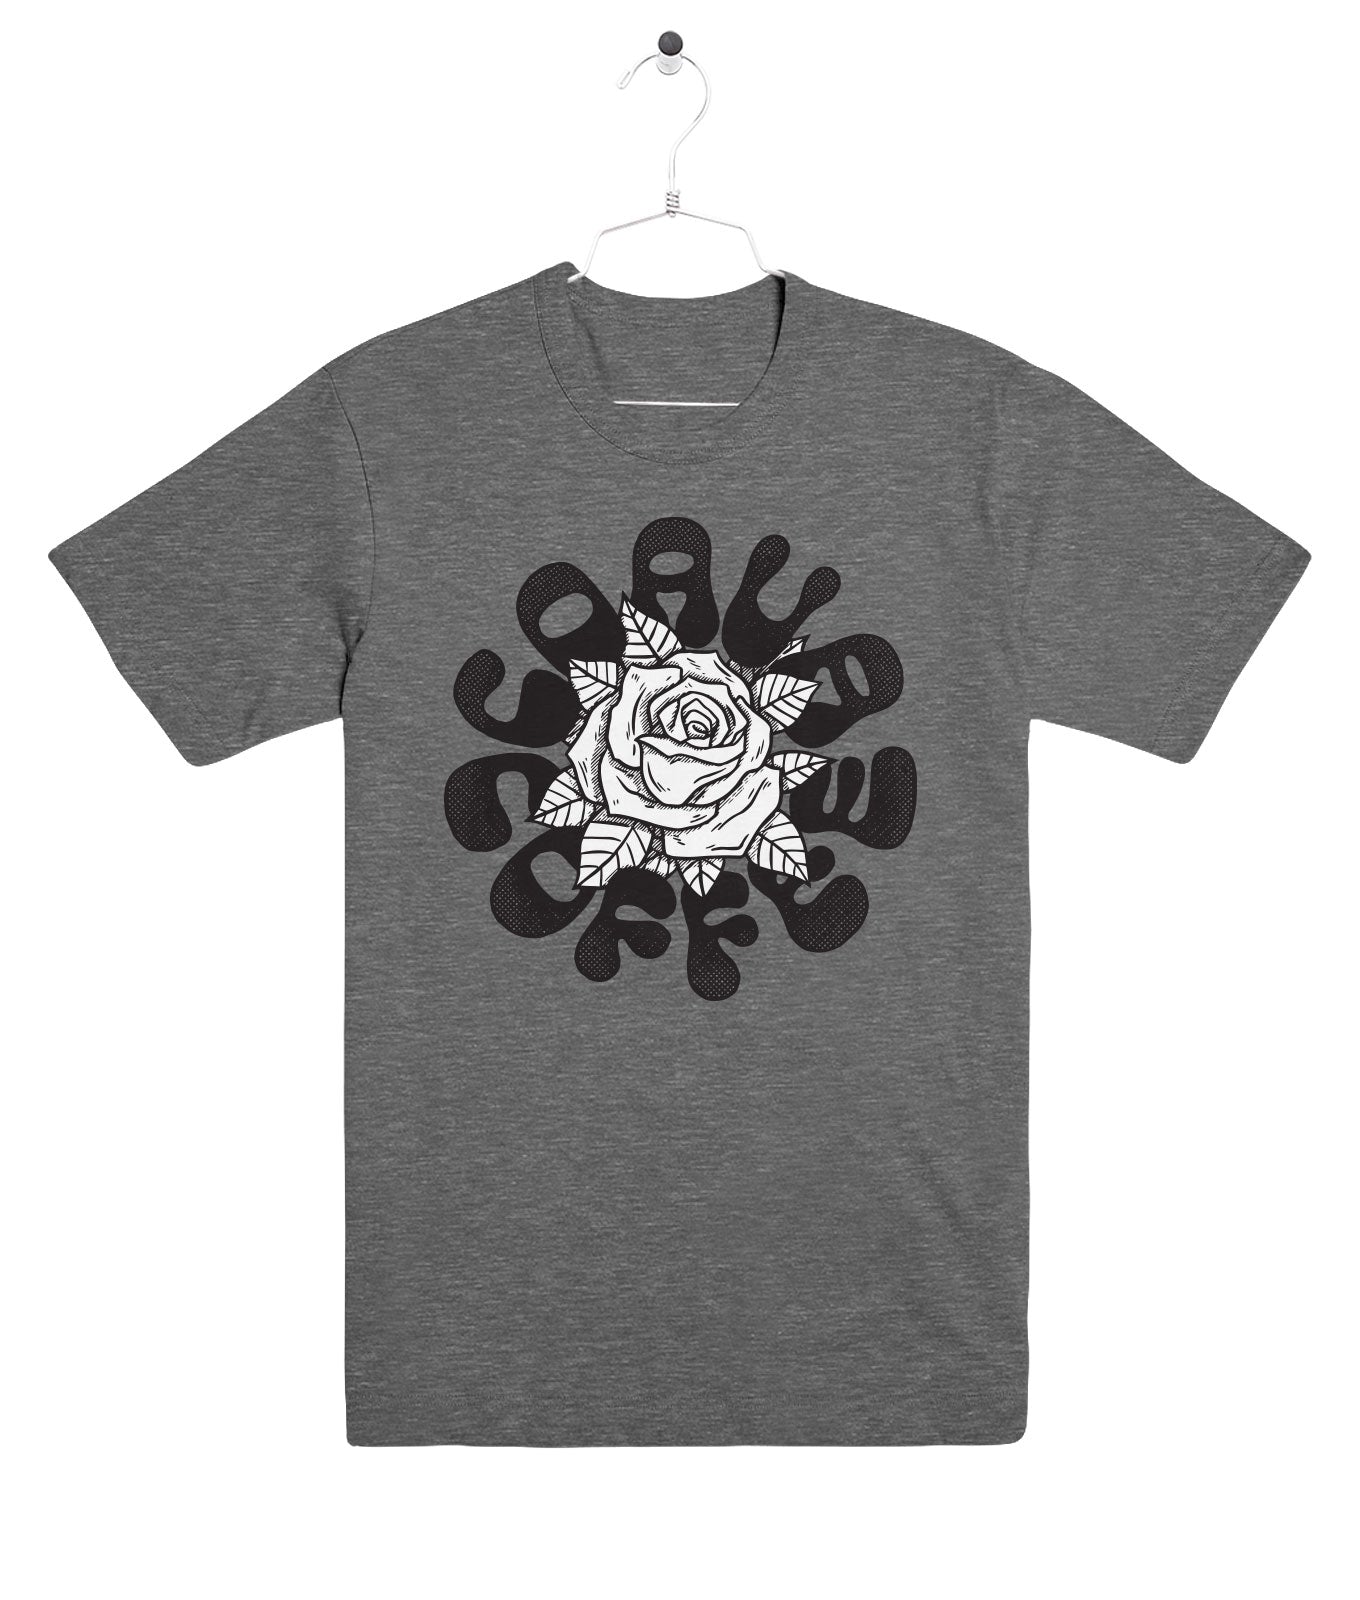 Coava Rose T-Shirt